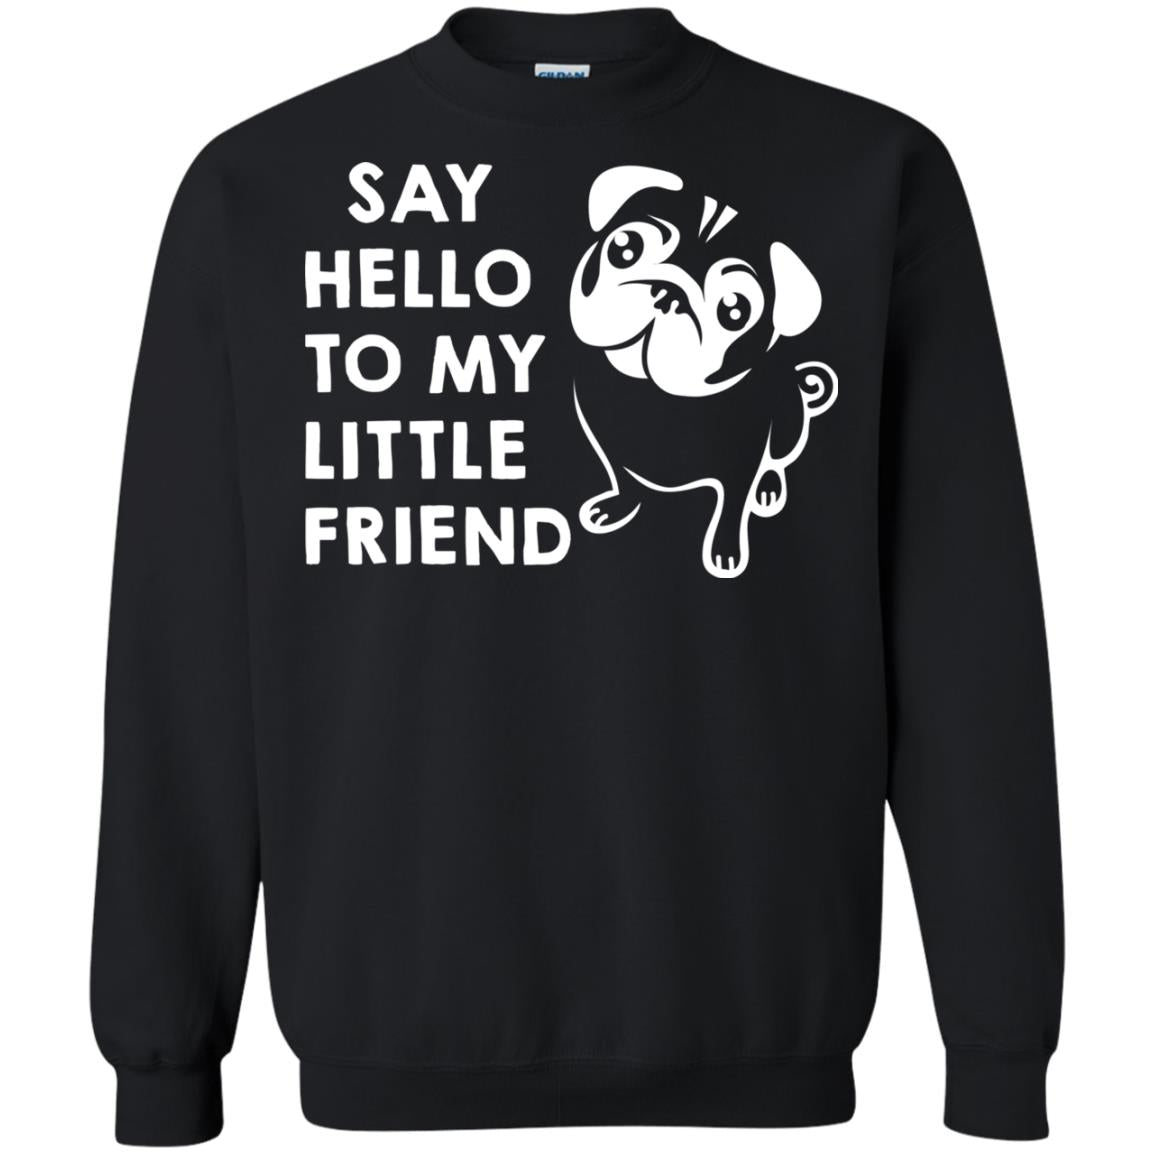 Say Hello To My Little Friend Dog ShirtG180 Gildan Crewneck Pullover Sweatshirt 8 oz.